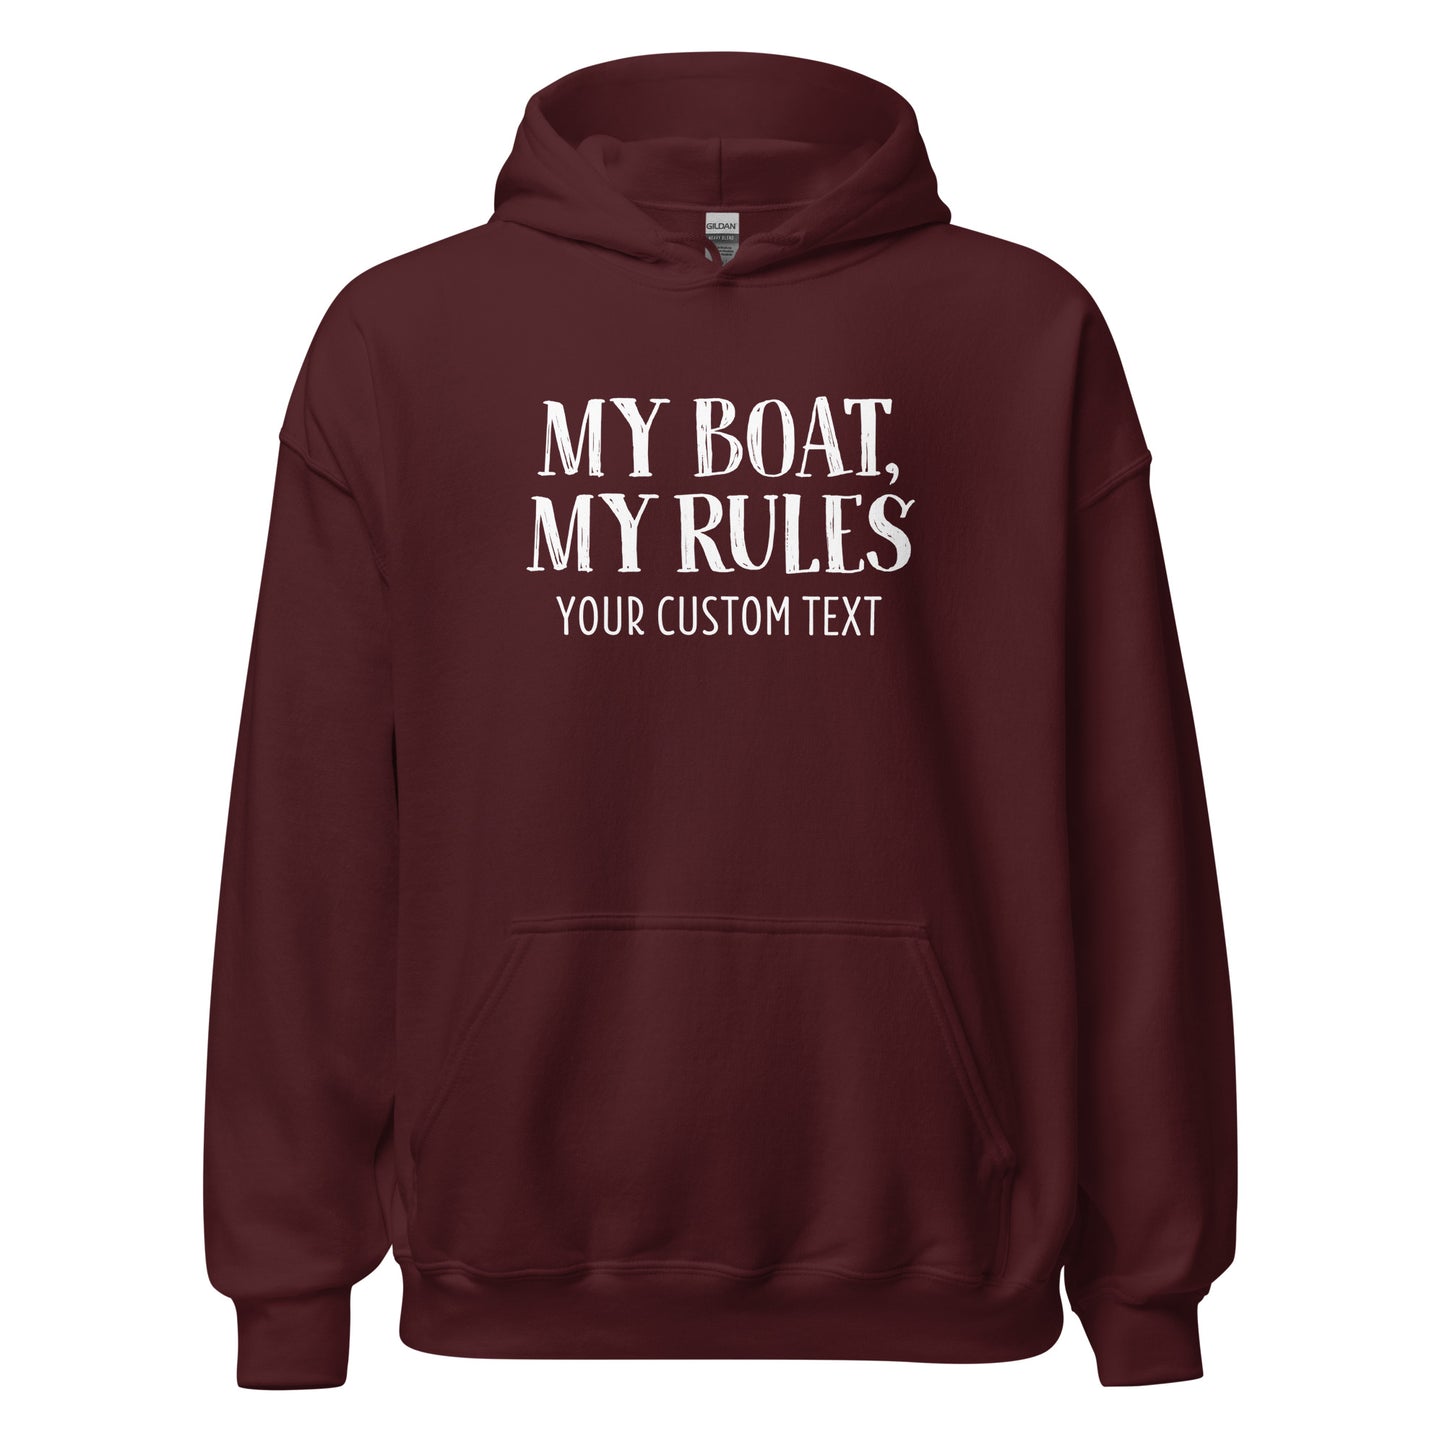 My Boat, My Rules - Smith Mountain Lake Unisex Hoodie Sweatshirt